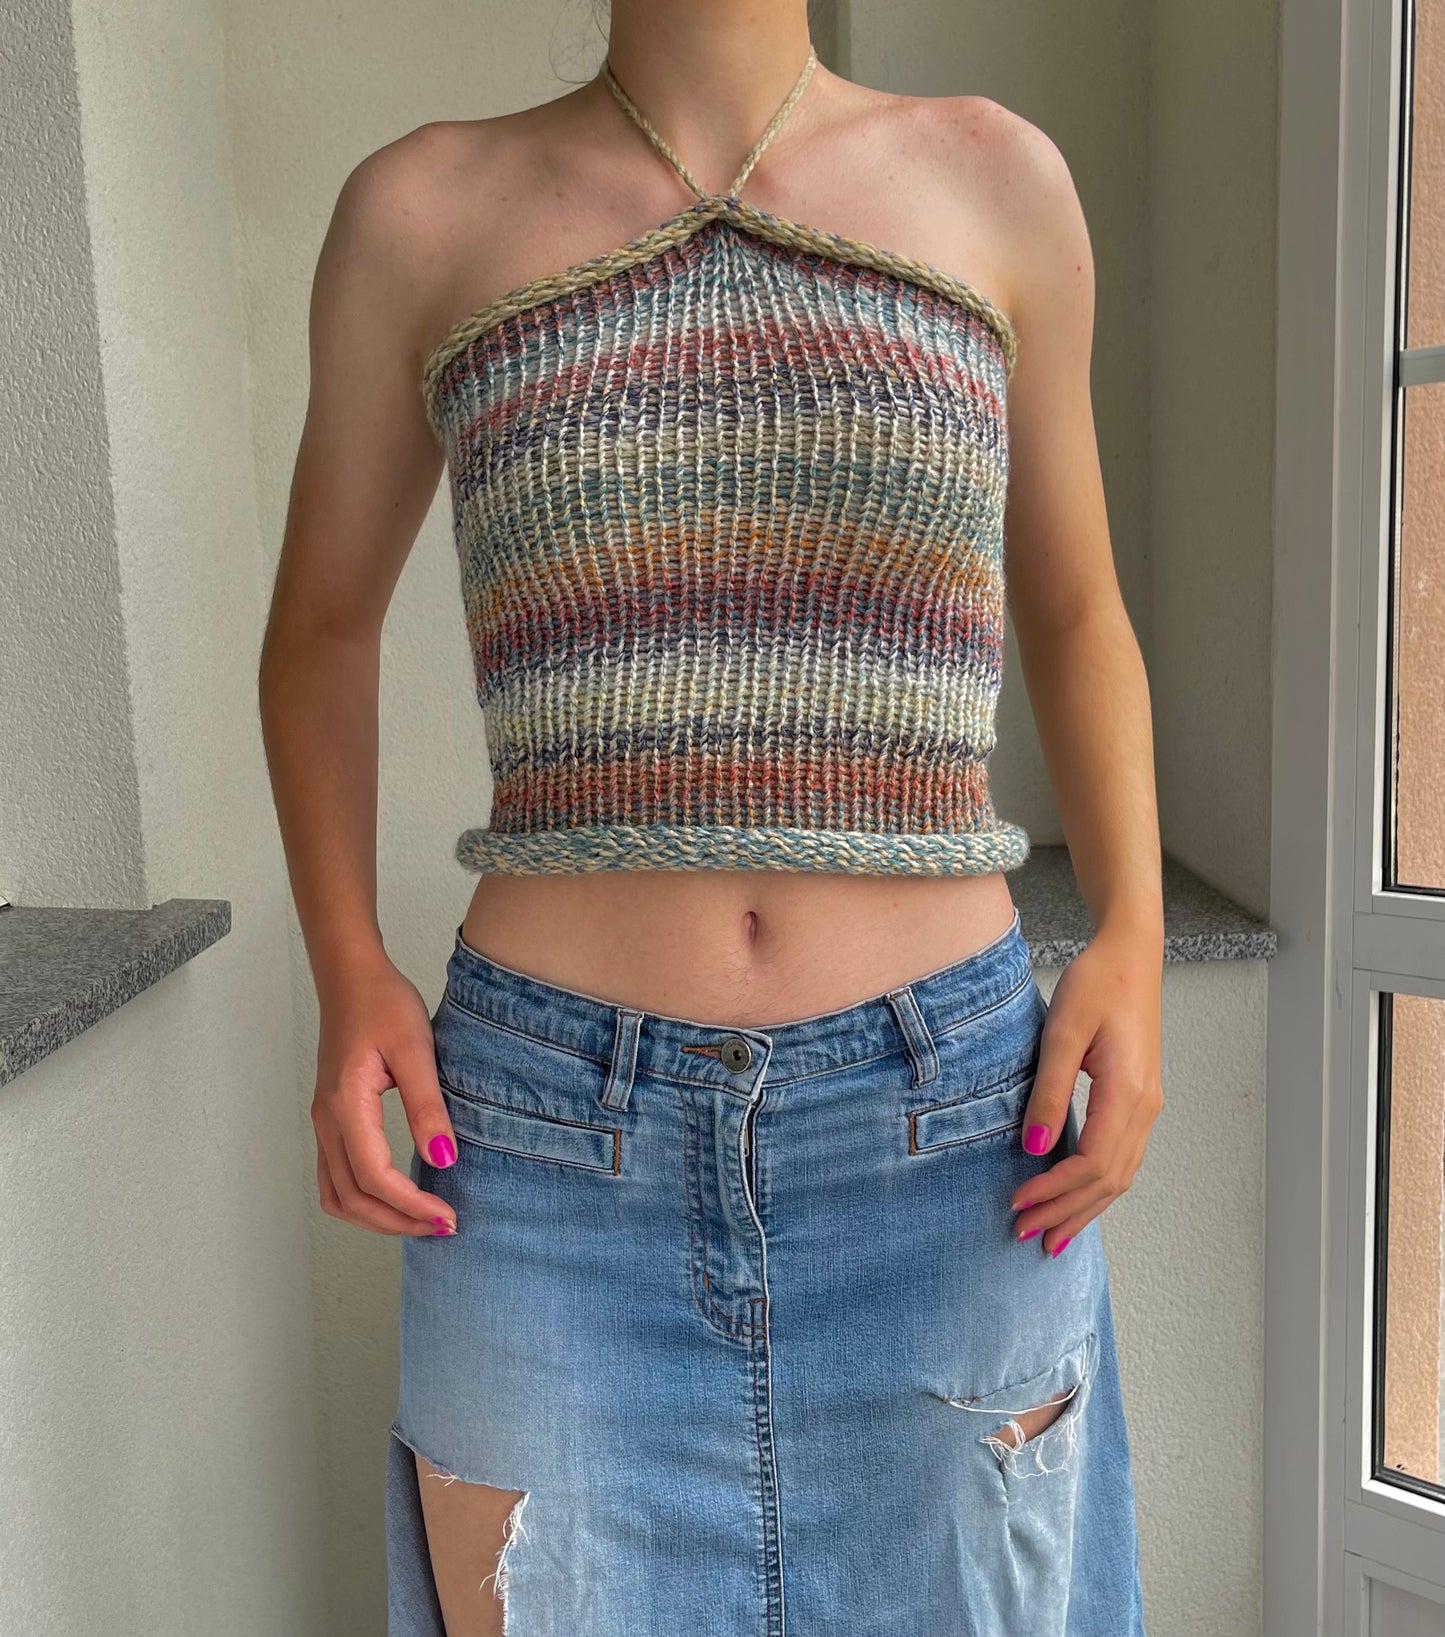 Handmade multicoloured knitted halter top